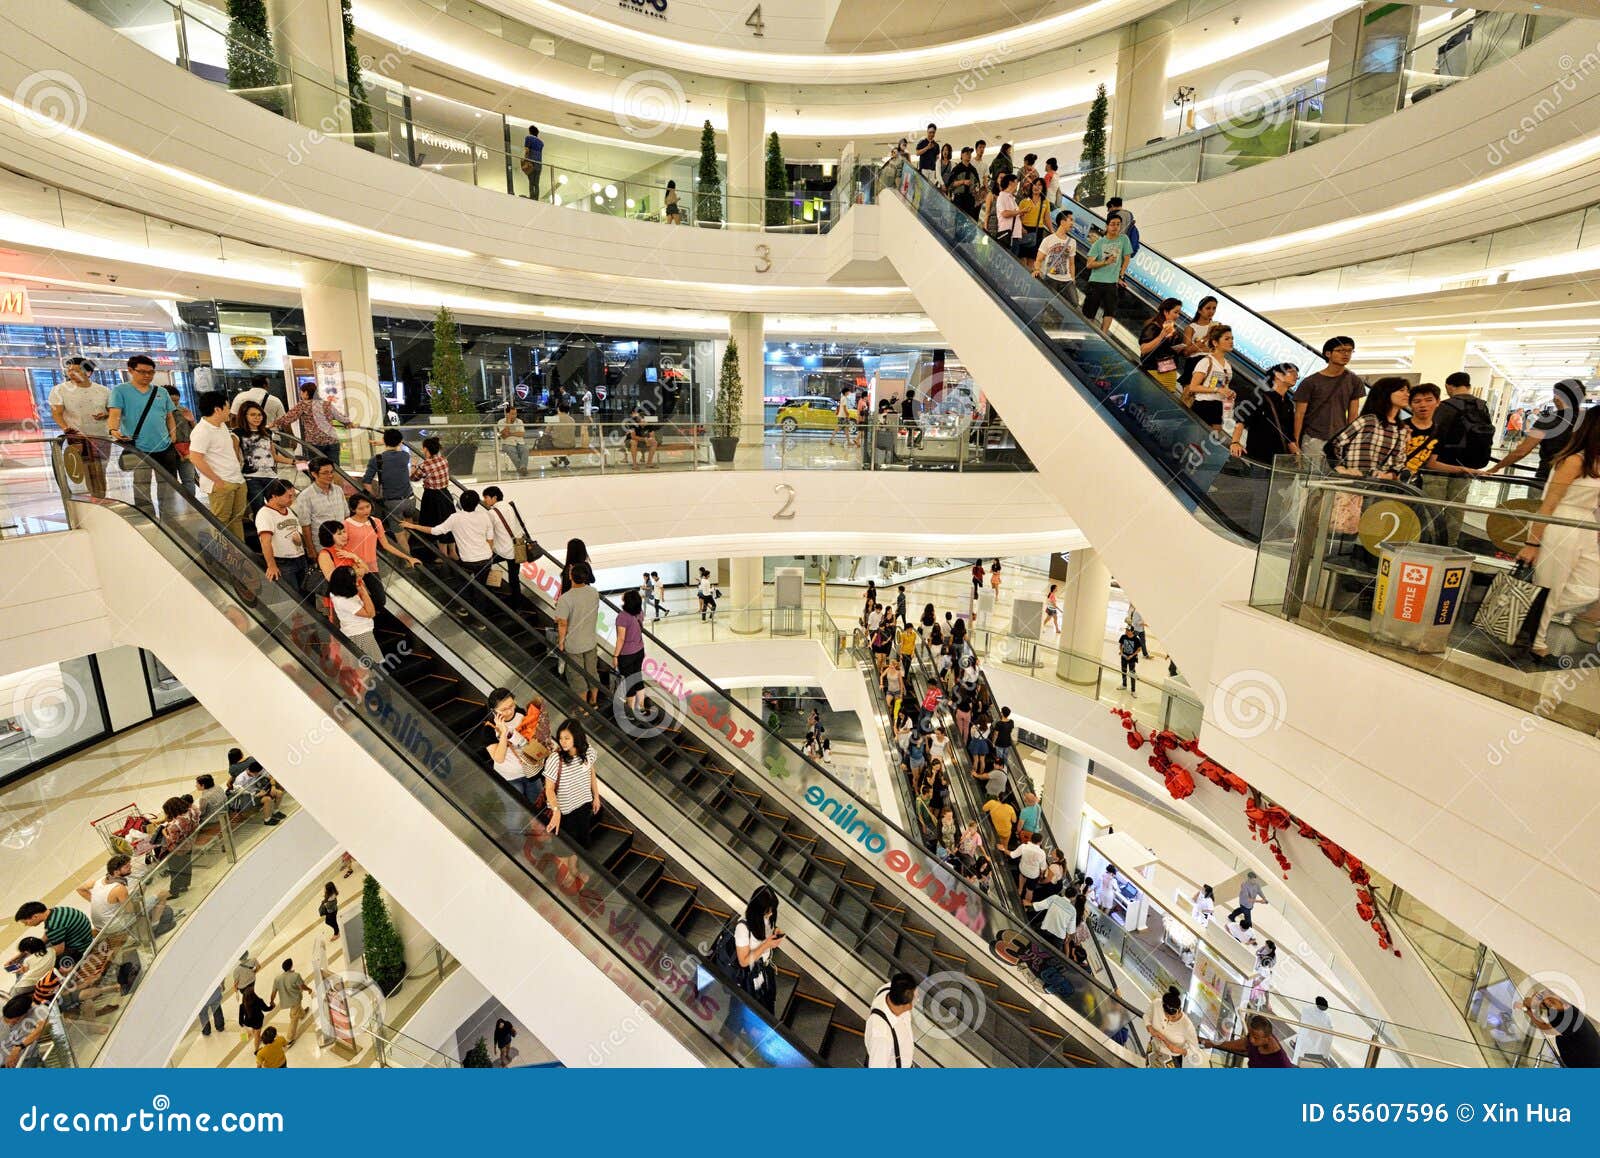 Siam Paragon Shopping Mall, Bangkok Editorial Photo - Image of center,  famed: 65607596